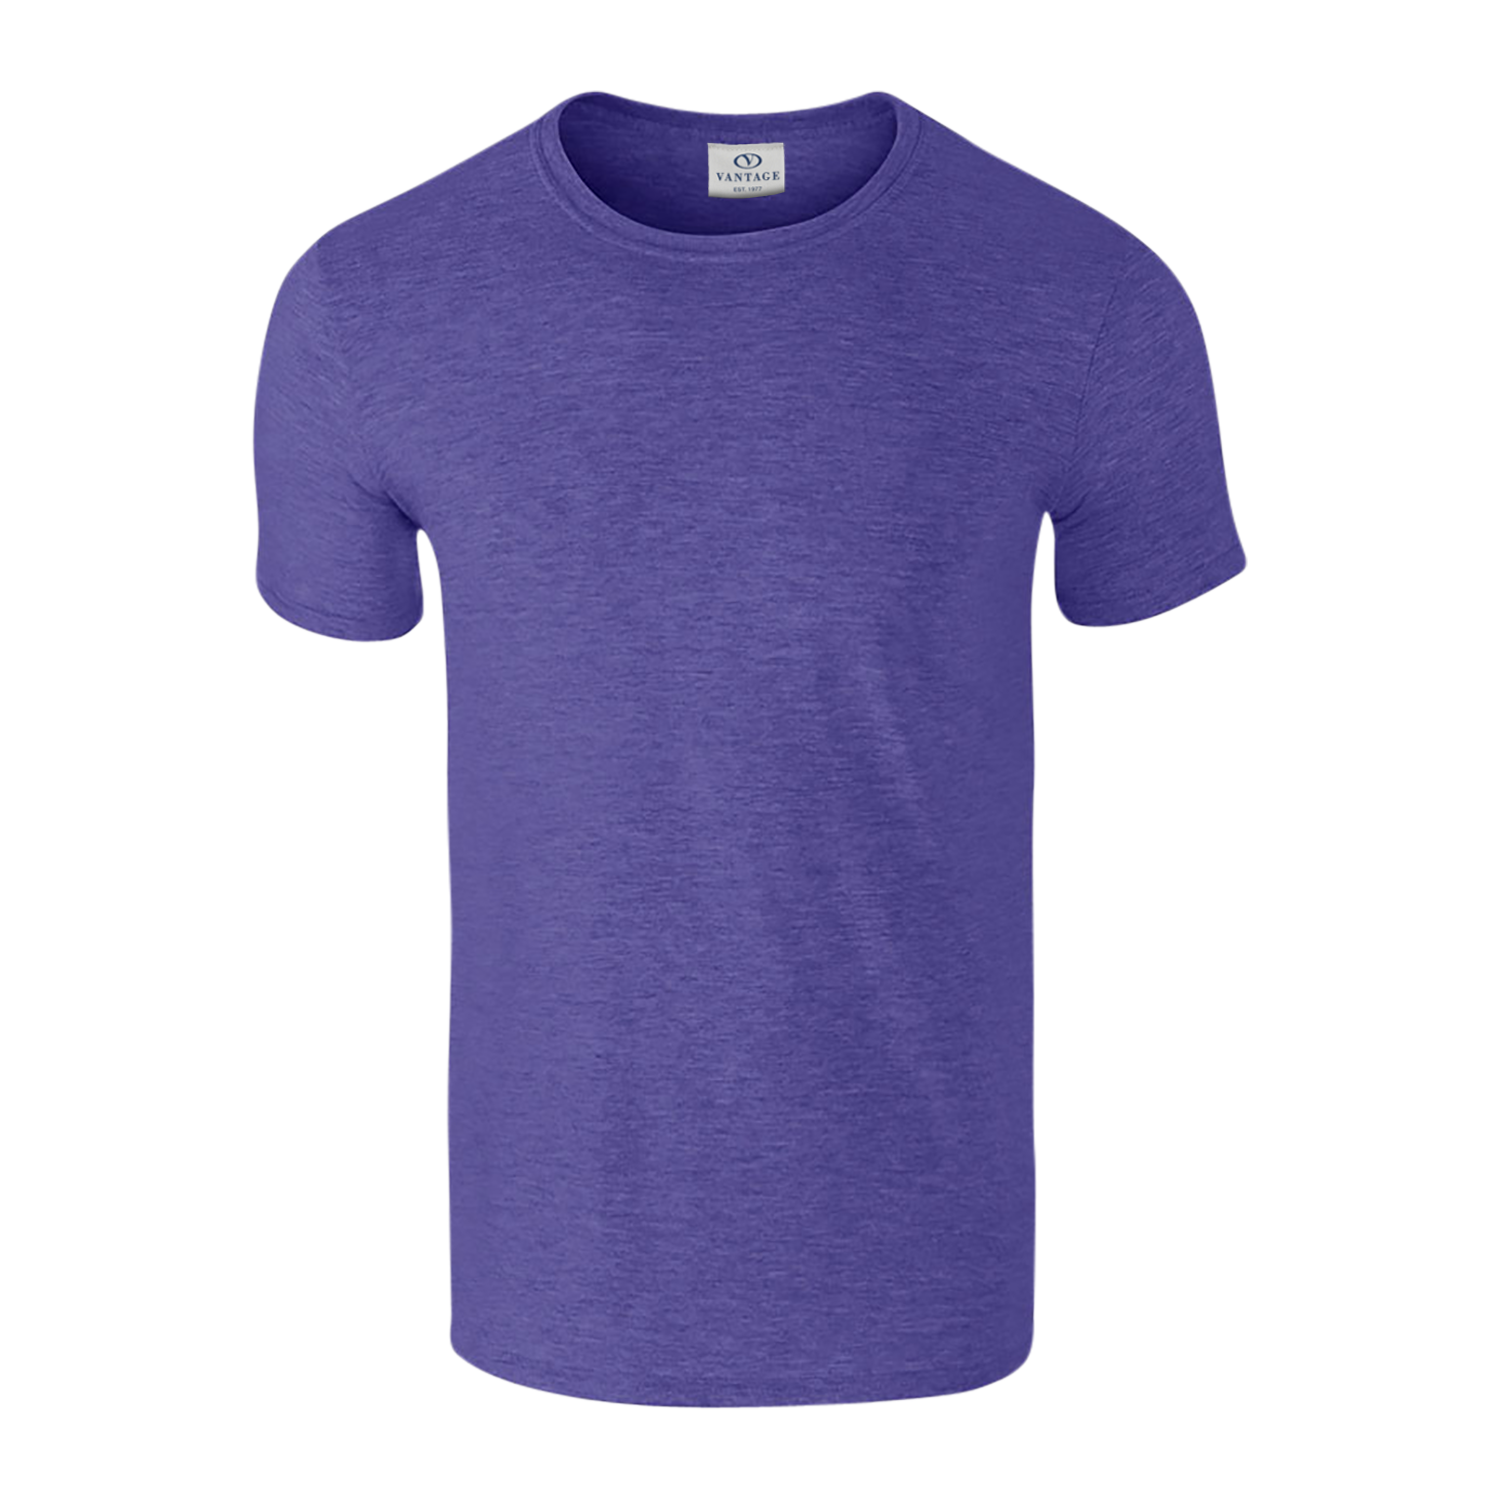 T-Shirts|Hi-Def T-Shirt for Digital Printing